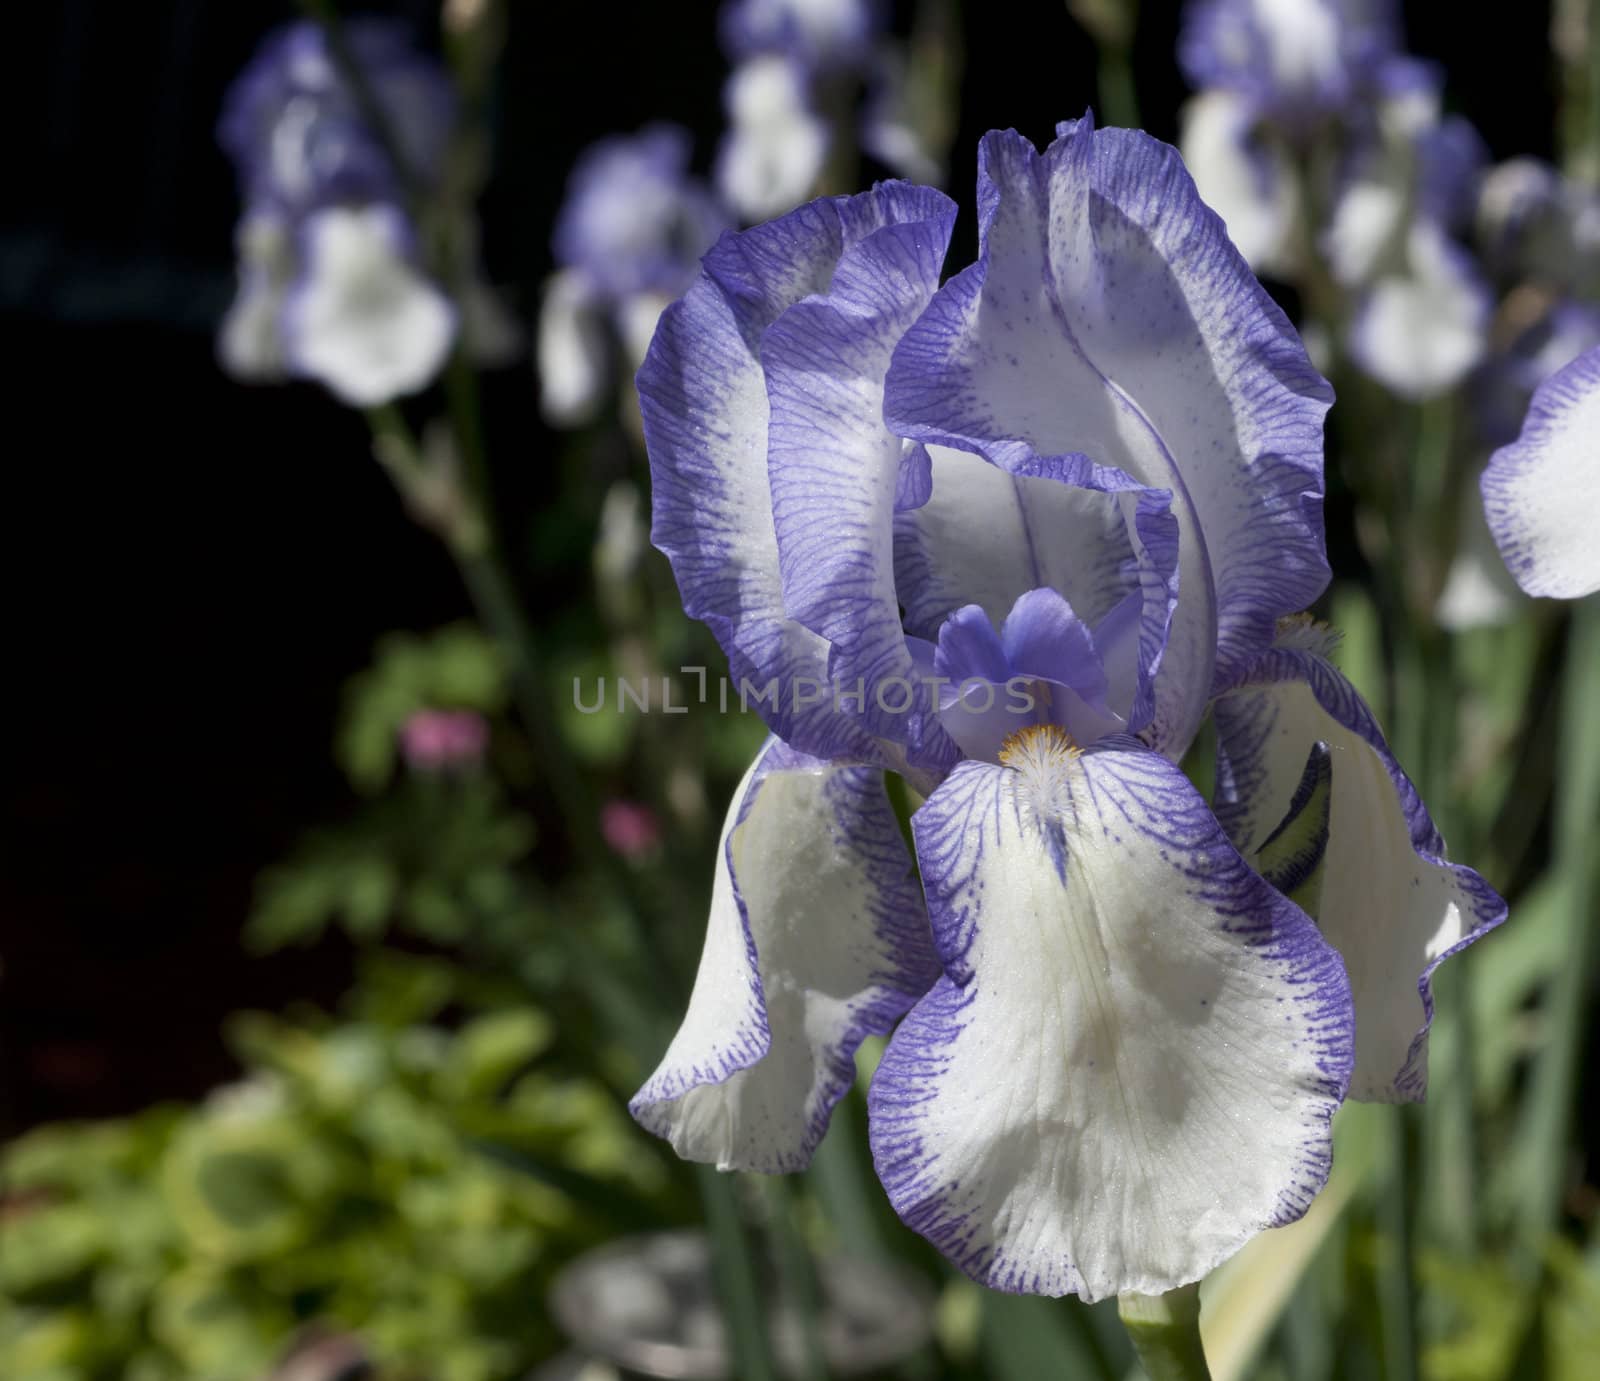 Focus on Iris Blossom by Gordo25